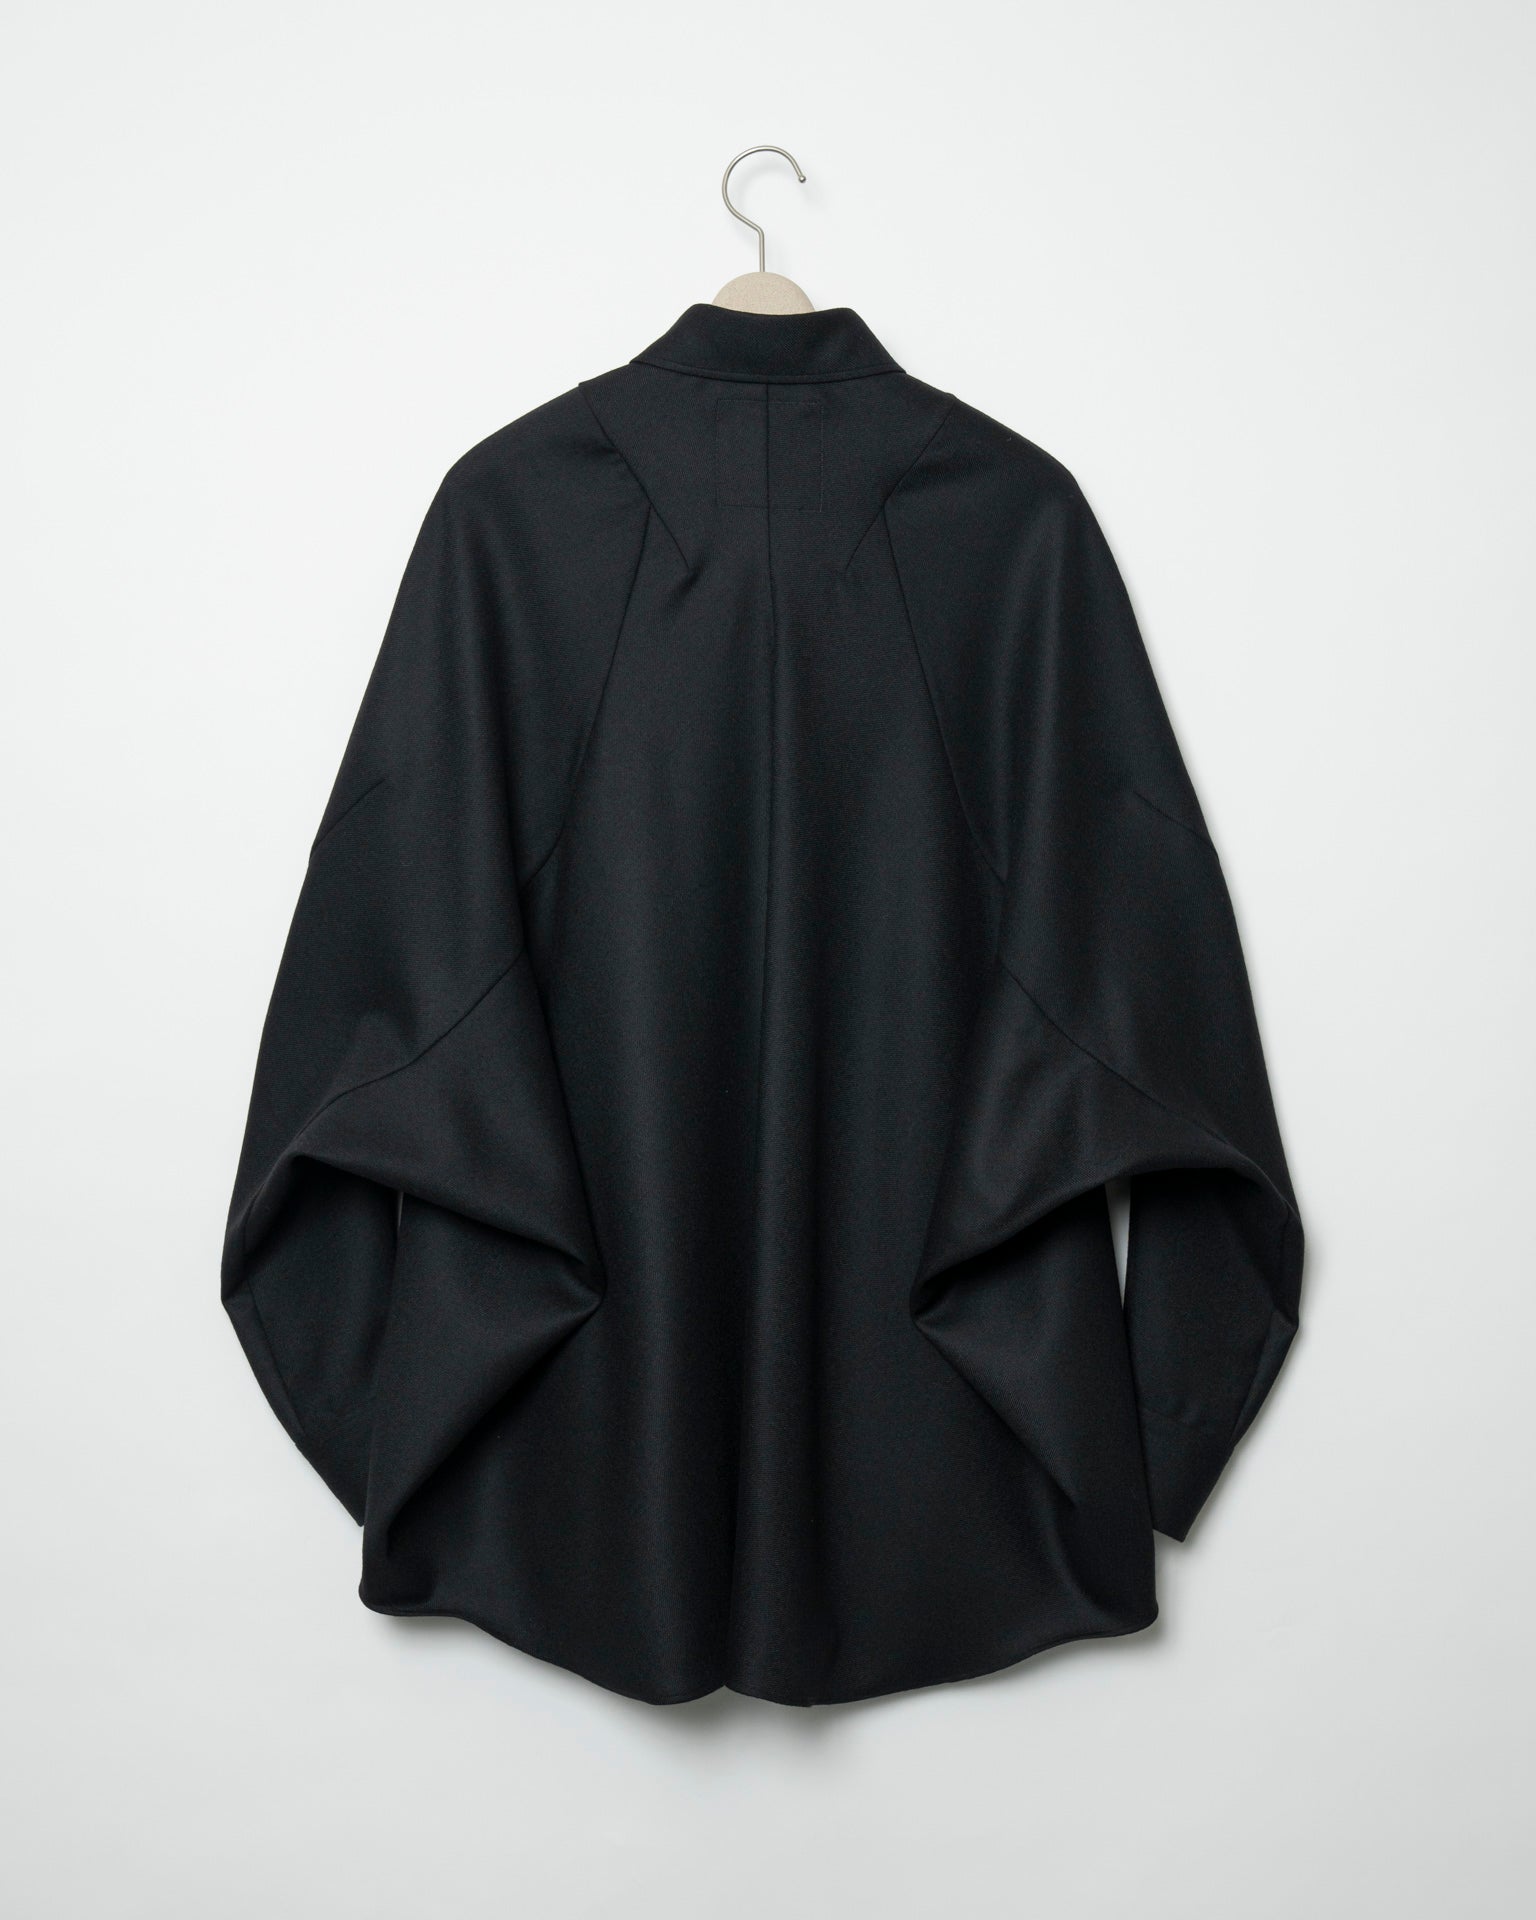 Kinetic wool shirt – FUMITO GANRYU OFFICIAL STORE